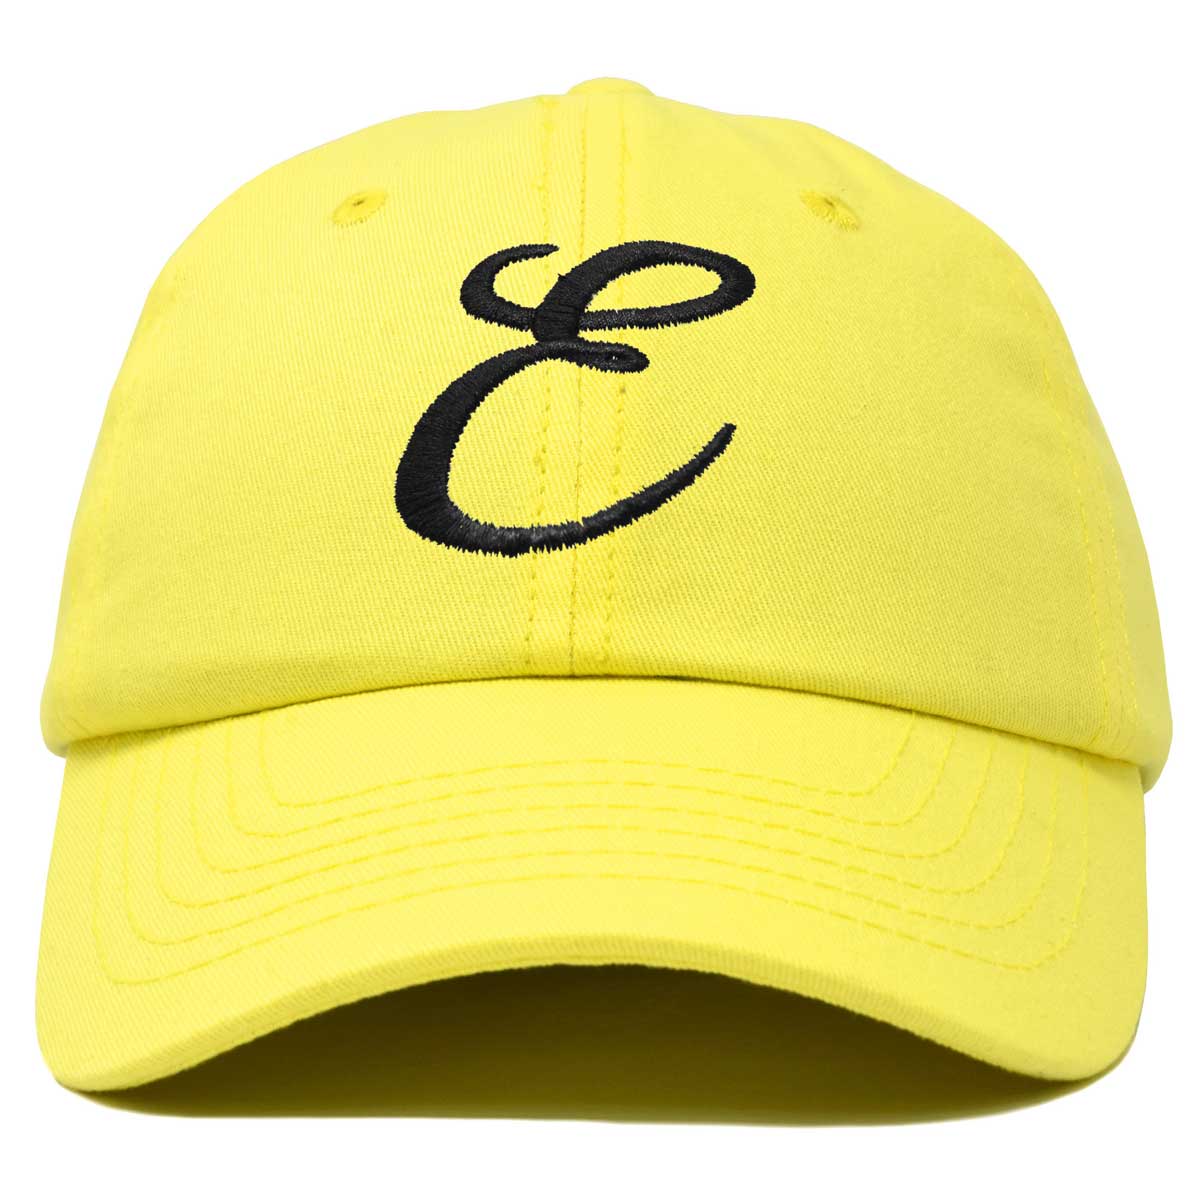 Dalix Initial Letter E Hat